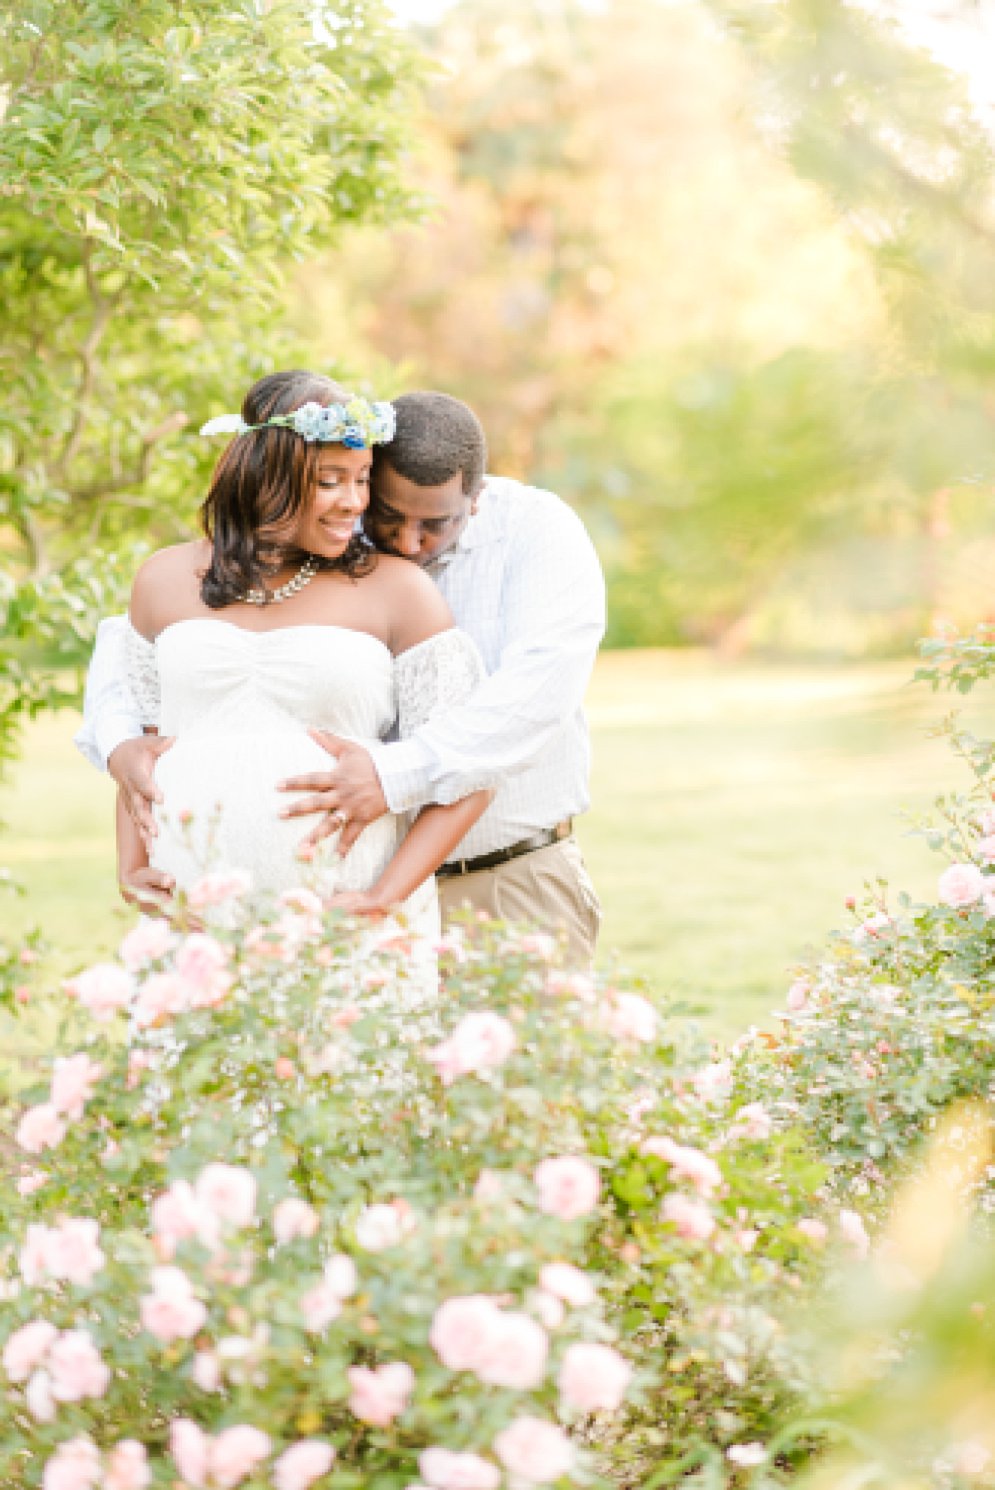 JC Raulston Arboretum maternity photos raleigh nc wedding Charleston SC wedding photographer_6251.jpg